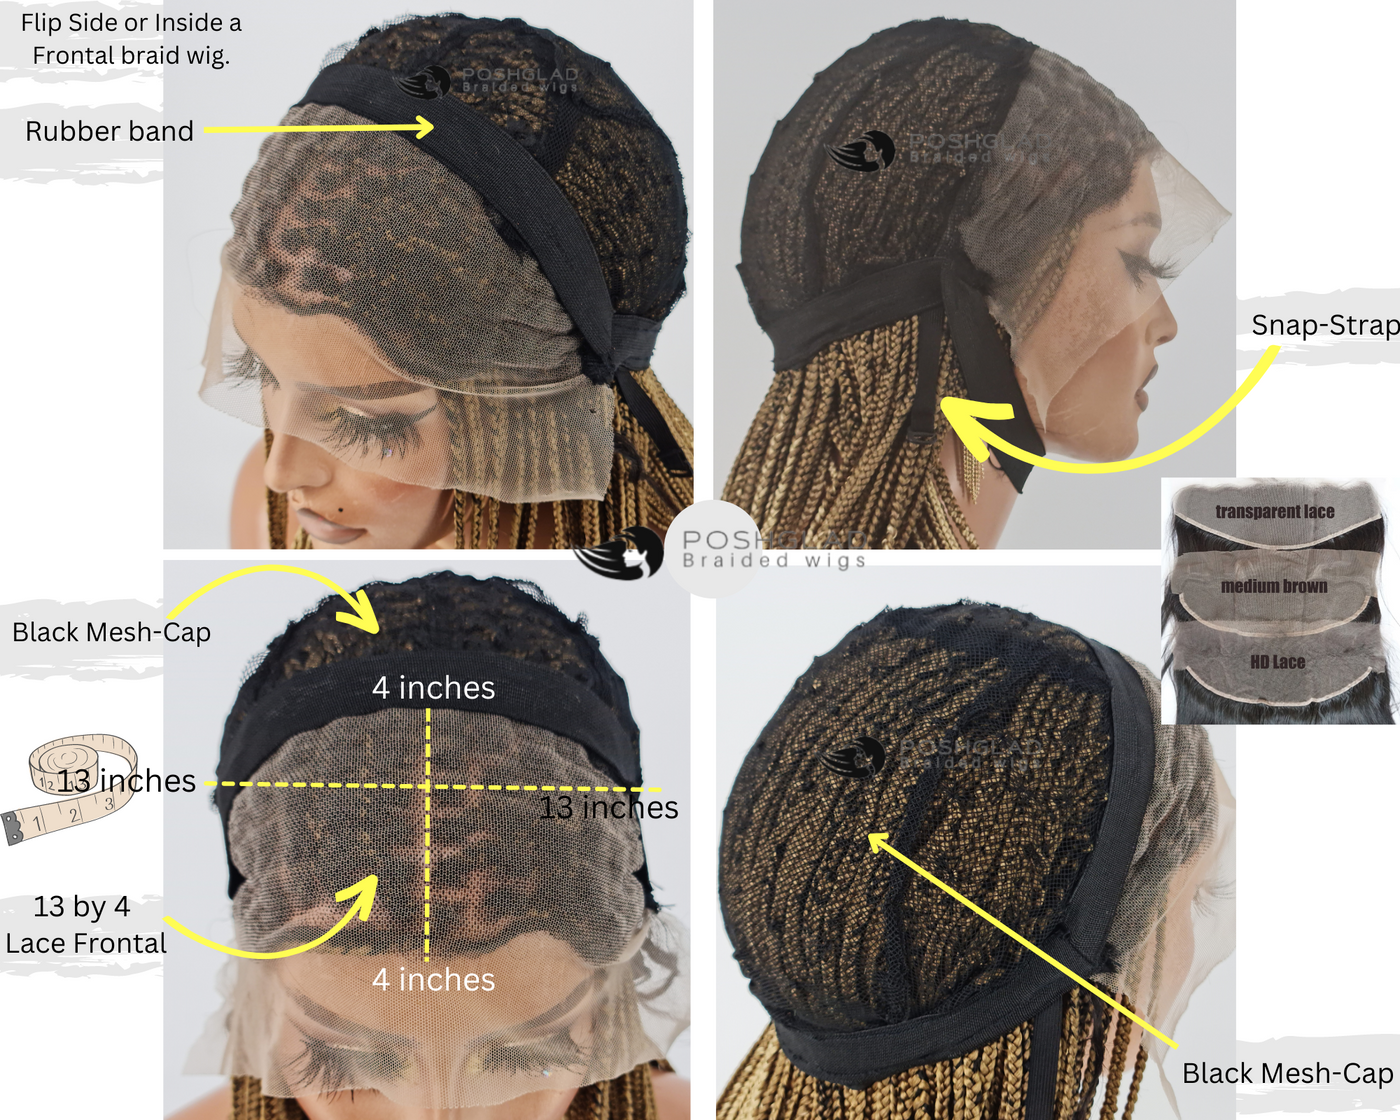 Loose Box Braid Wig - (13 by 4 Ombre Color) Poshglad Braided Wigs Box Braid Wig